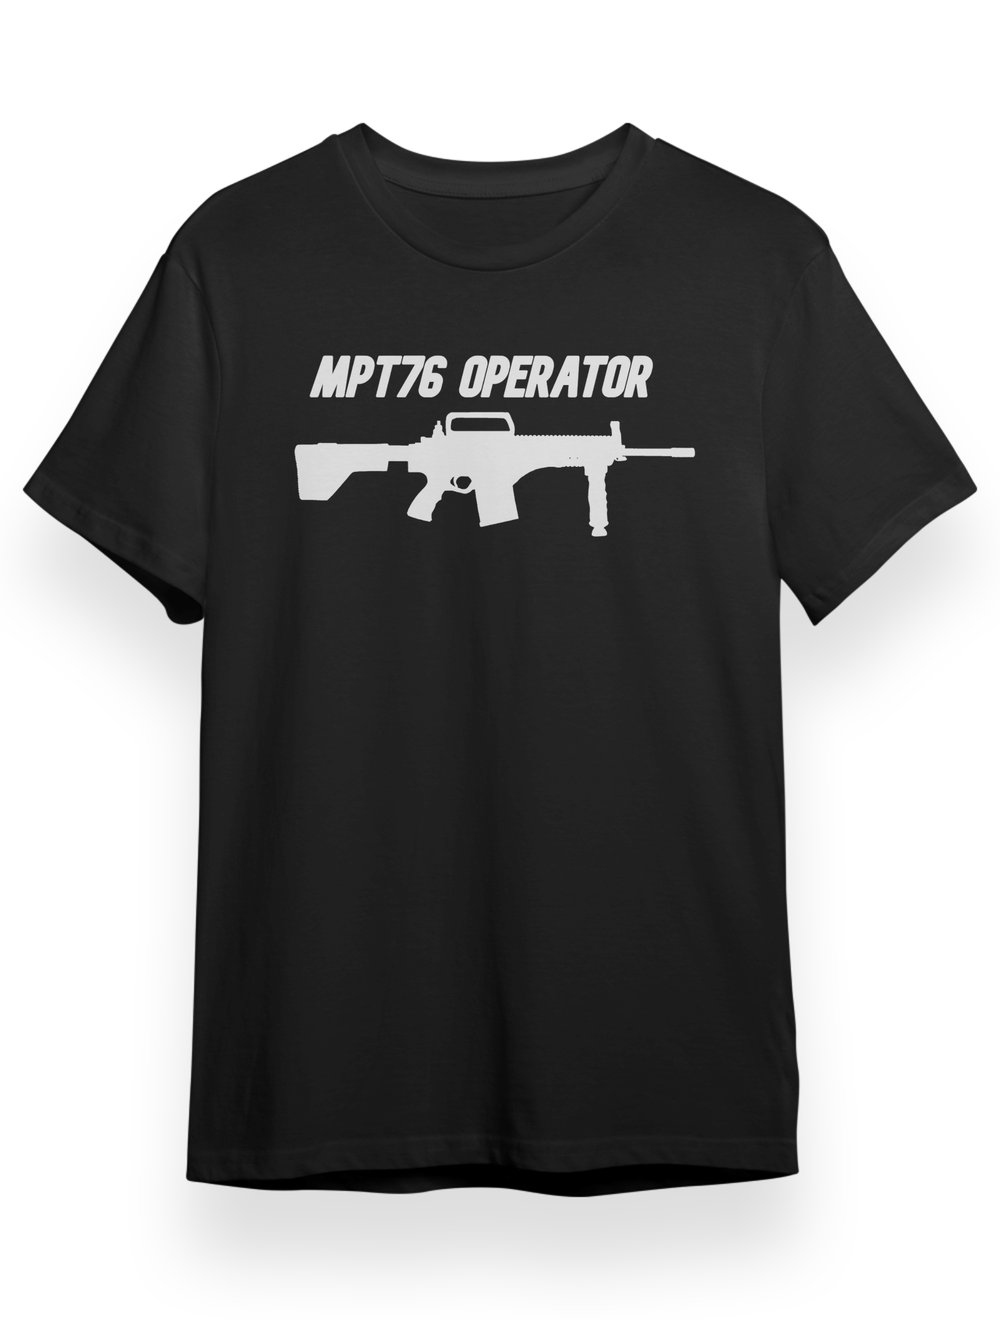 MPT76 OPERATOR